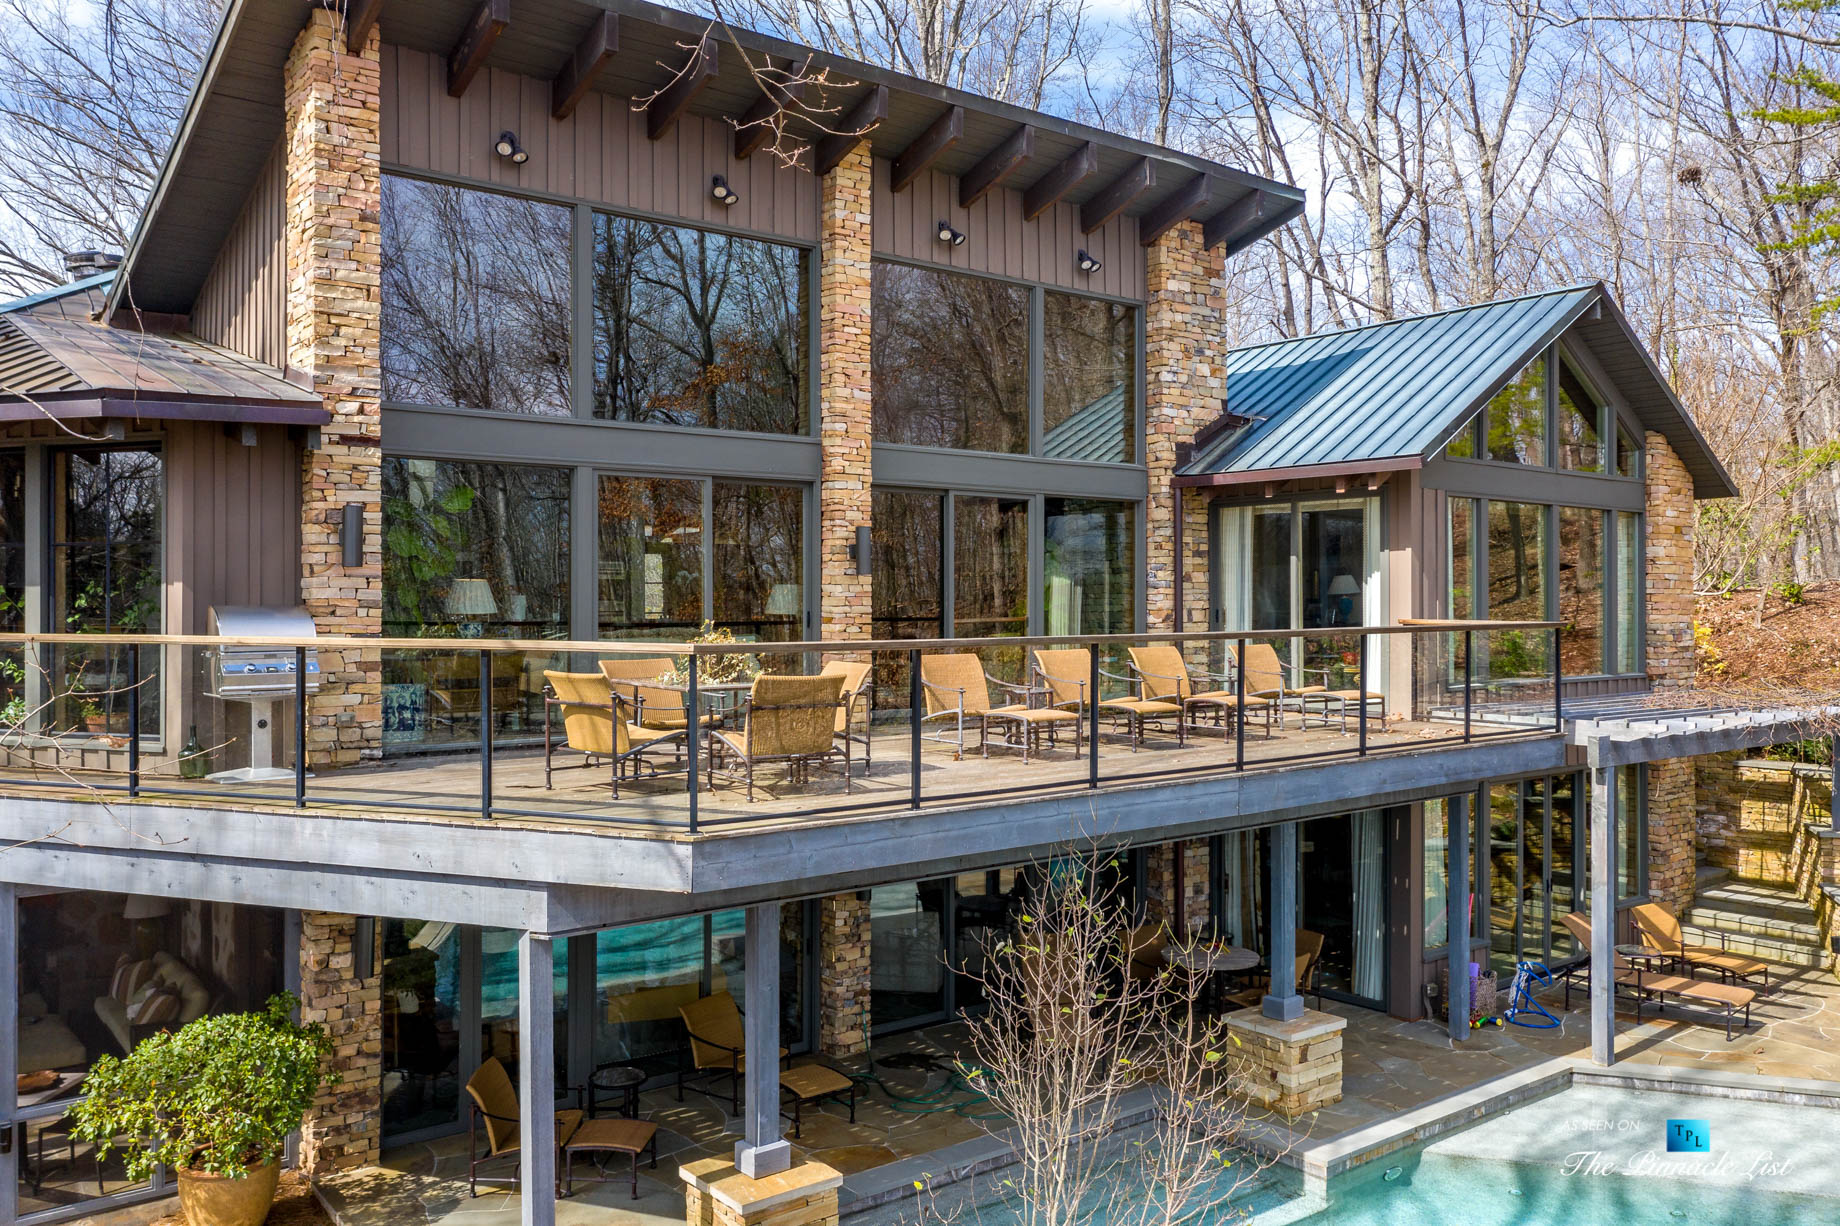 7860 Chestnut Hill Rd, Cumming, GA, USA - Exterior Deck - Luxury Real Estate - Lake Lanier Mid-Century Modern Stone Home